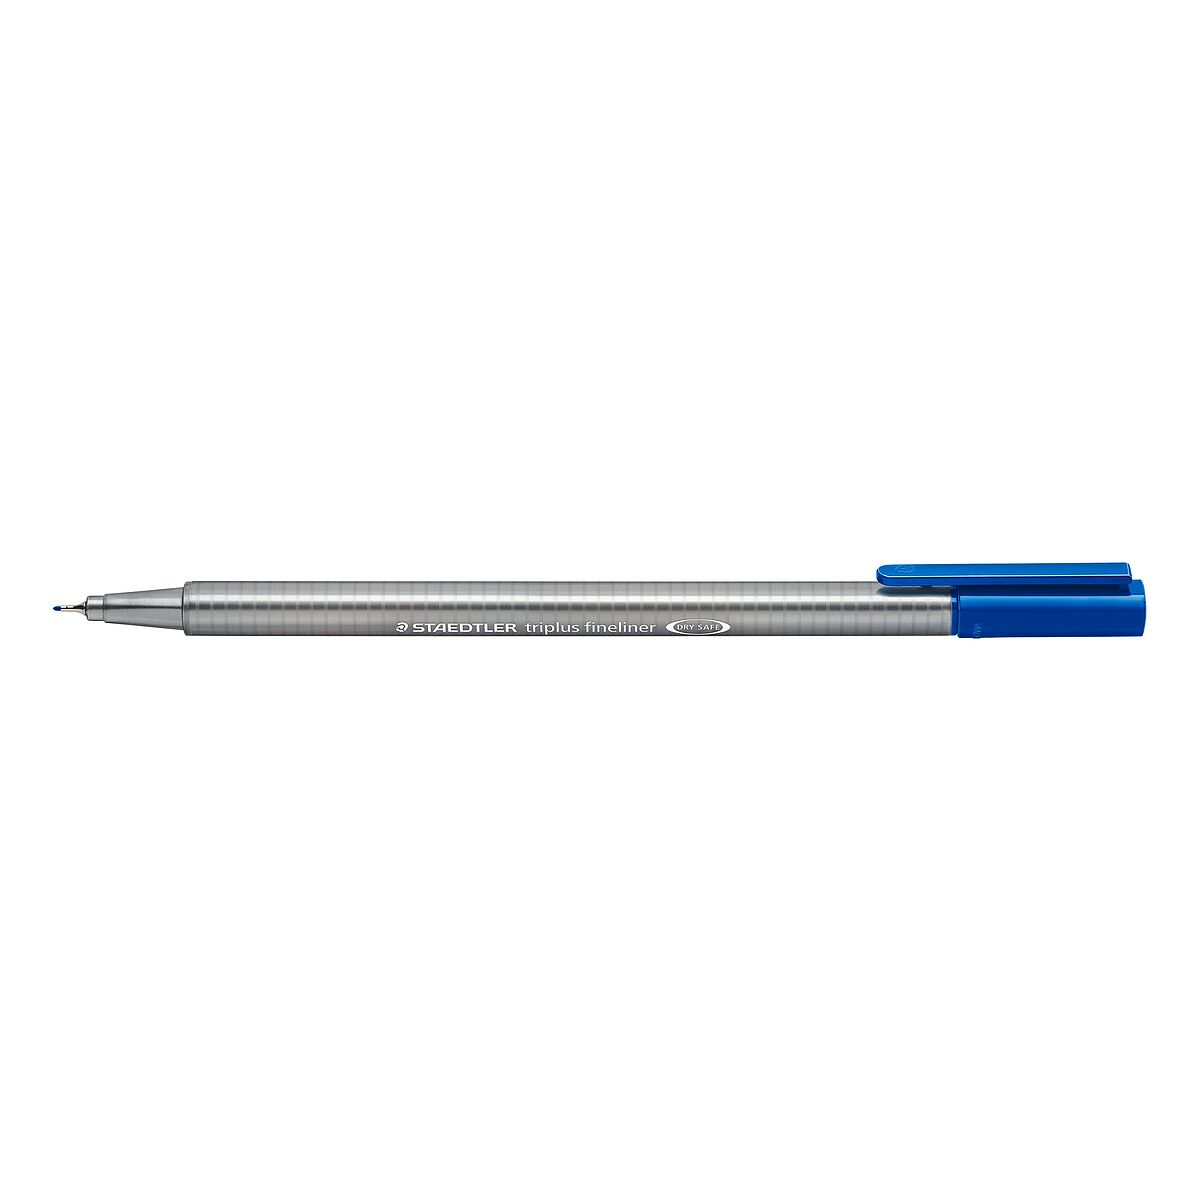 Staedtler Triplus 334 C30P Fine Liner Pens in 30 Colours